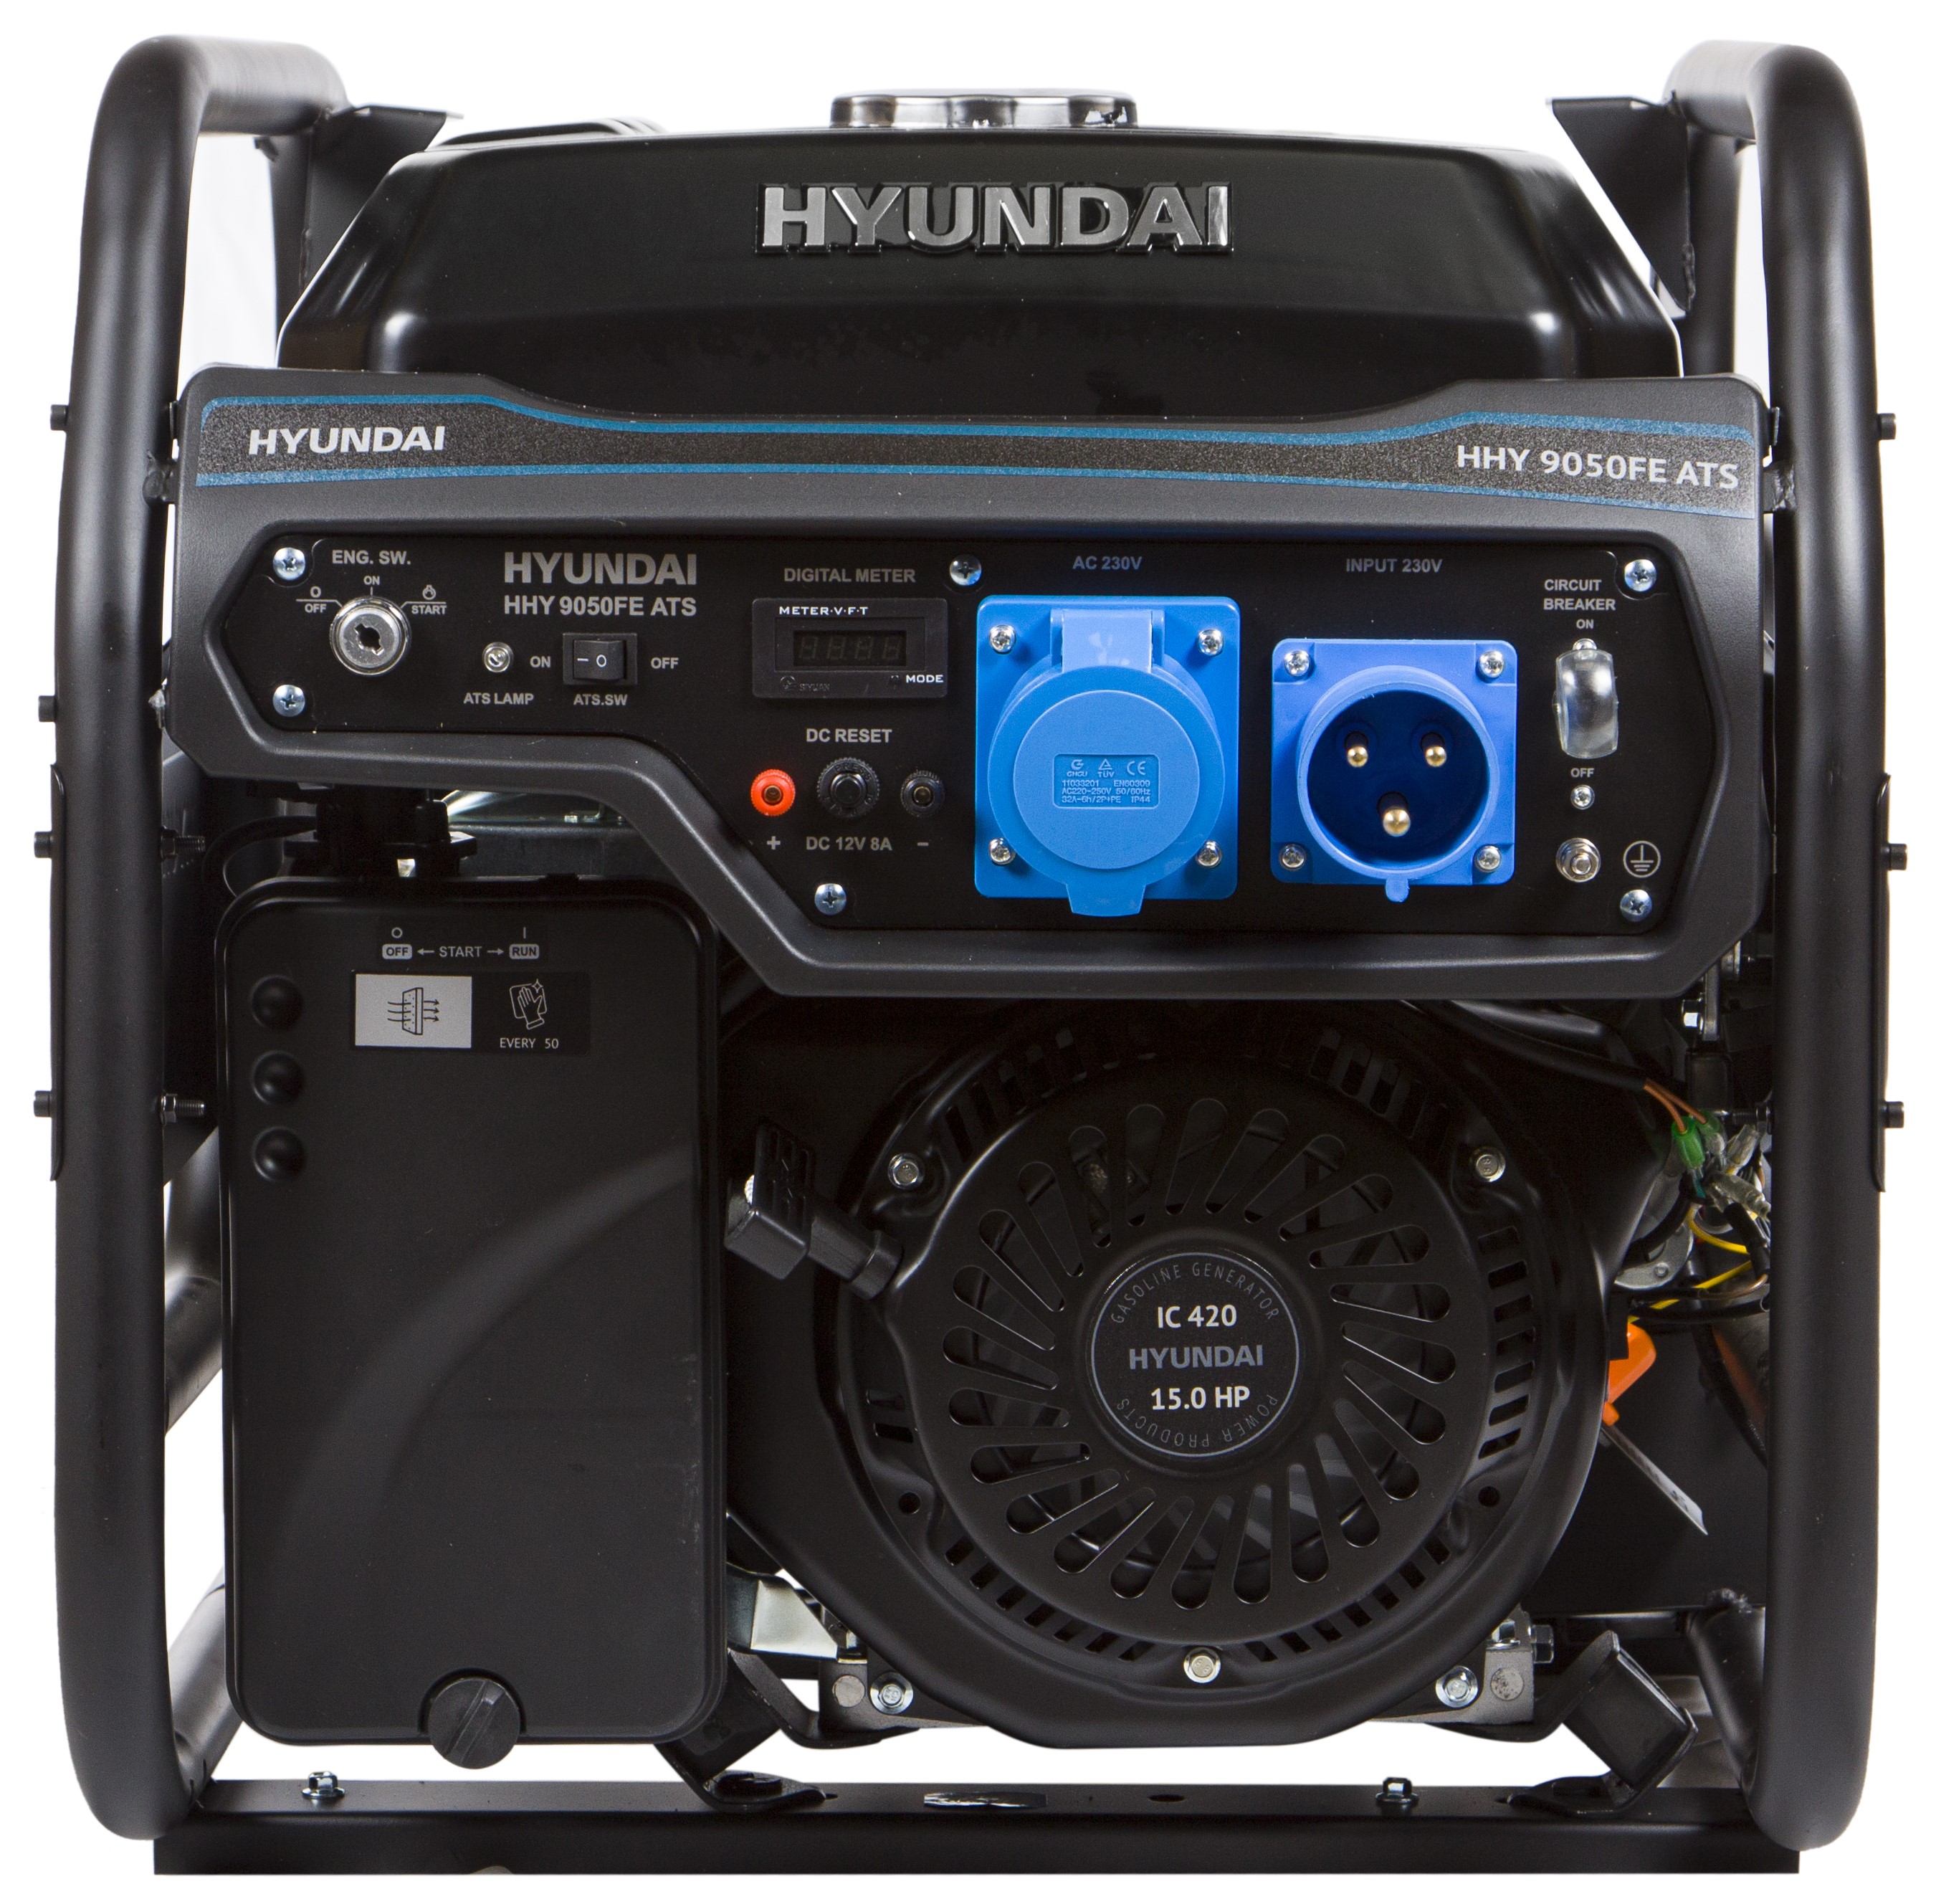 Характеристики генератор Hyundai HHY 9050FE ATS